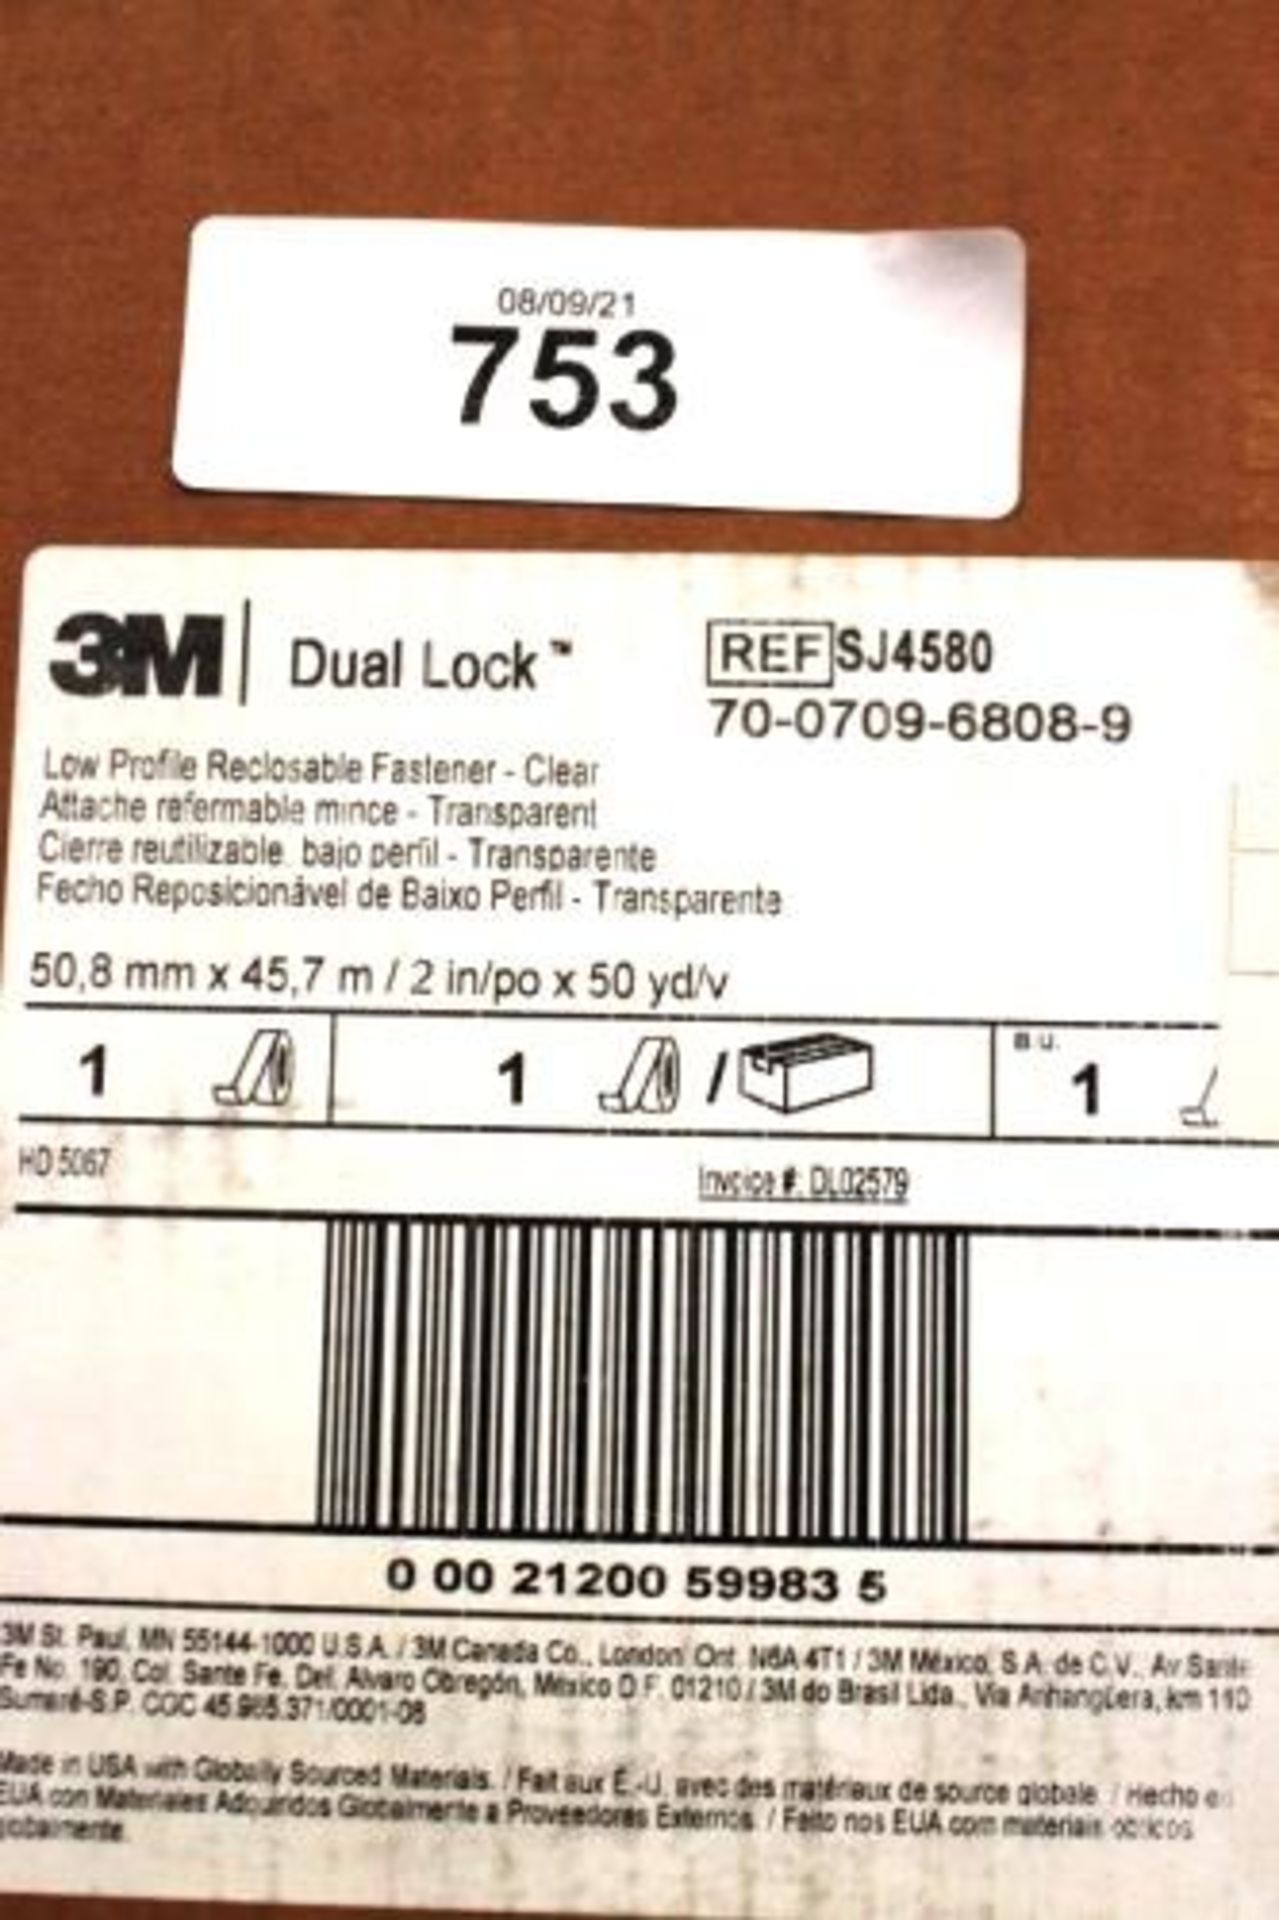 16 x 45m rolls of 3M dual lock low profile re-closable fastener, model 59953 - Grade B (GS30) - Image 3 of 3